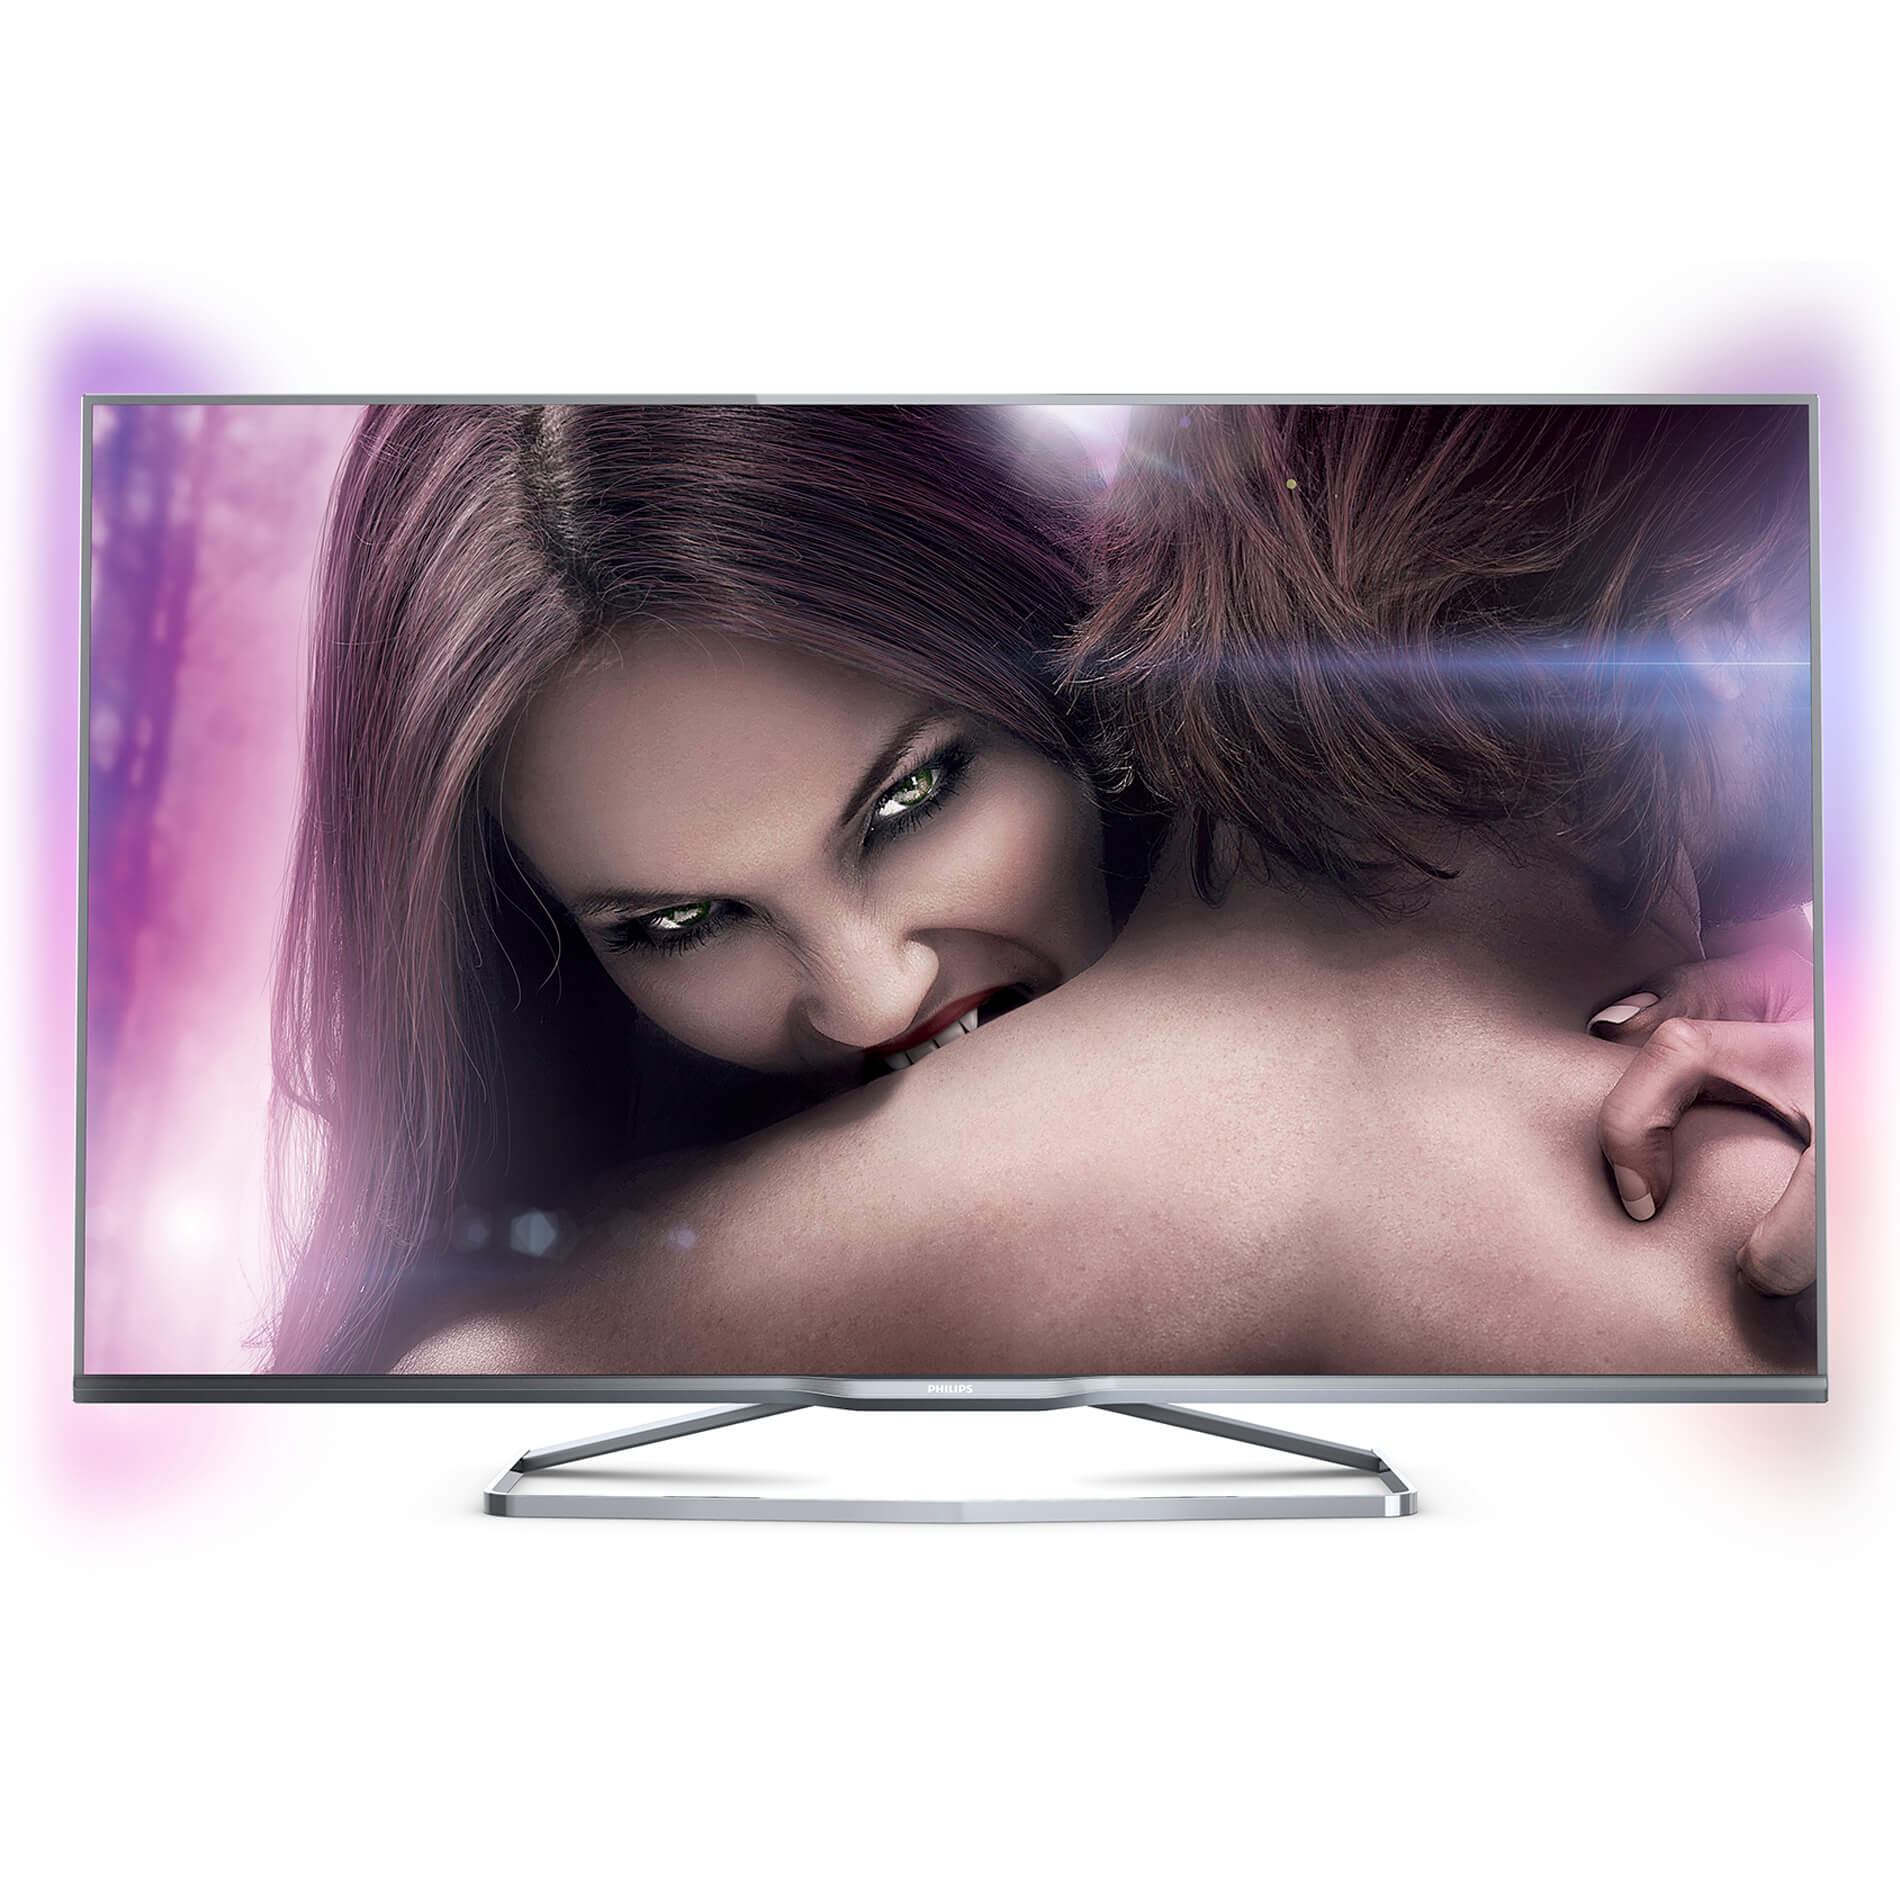  Televizor Smart LED 3D, Philips 47PFS7109/12, 119 cm, Full HD 